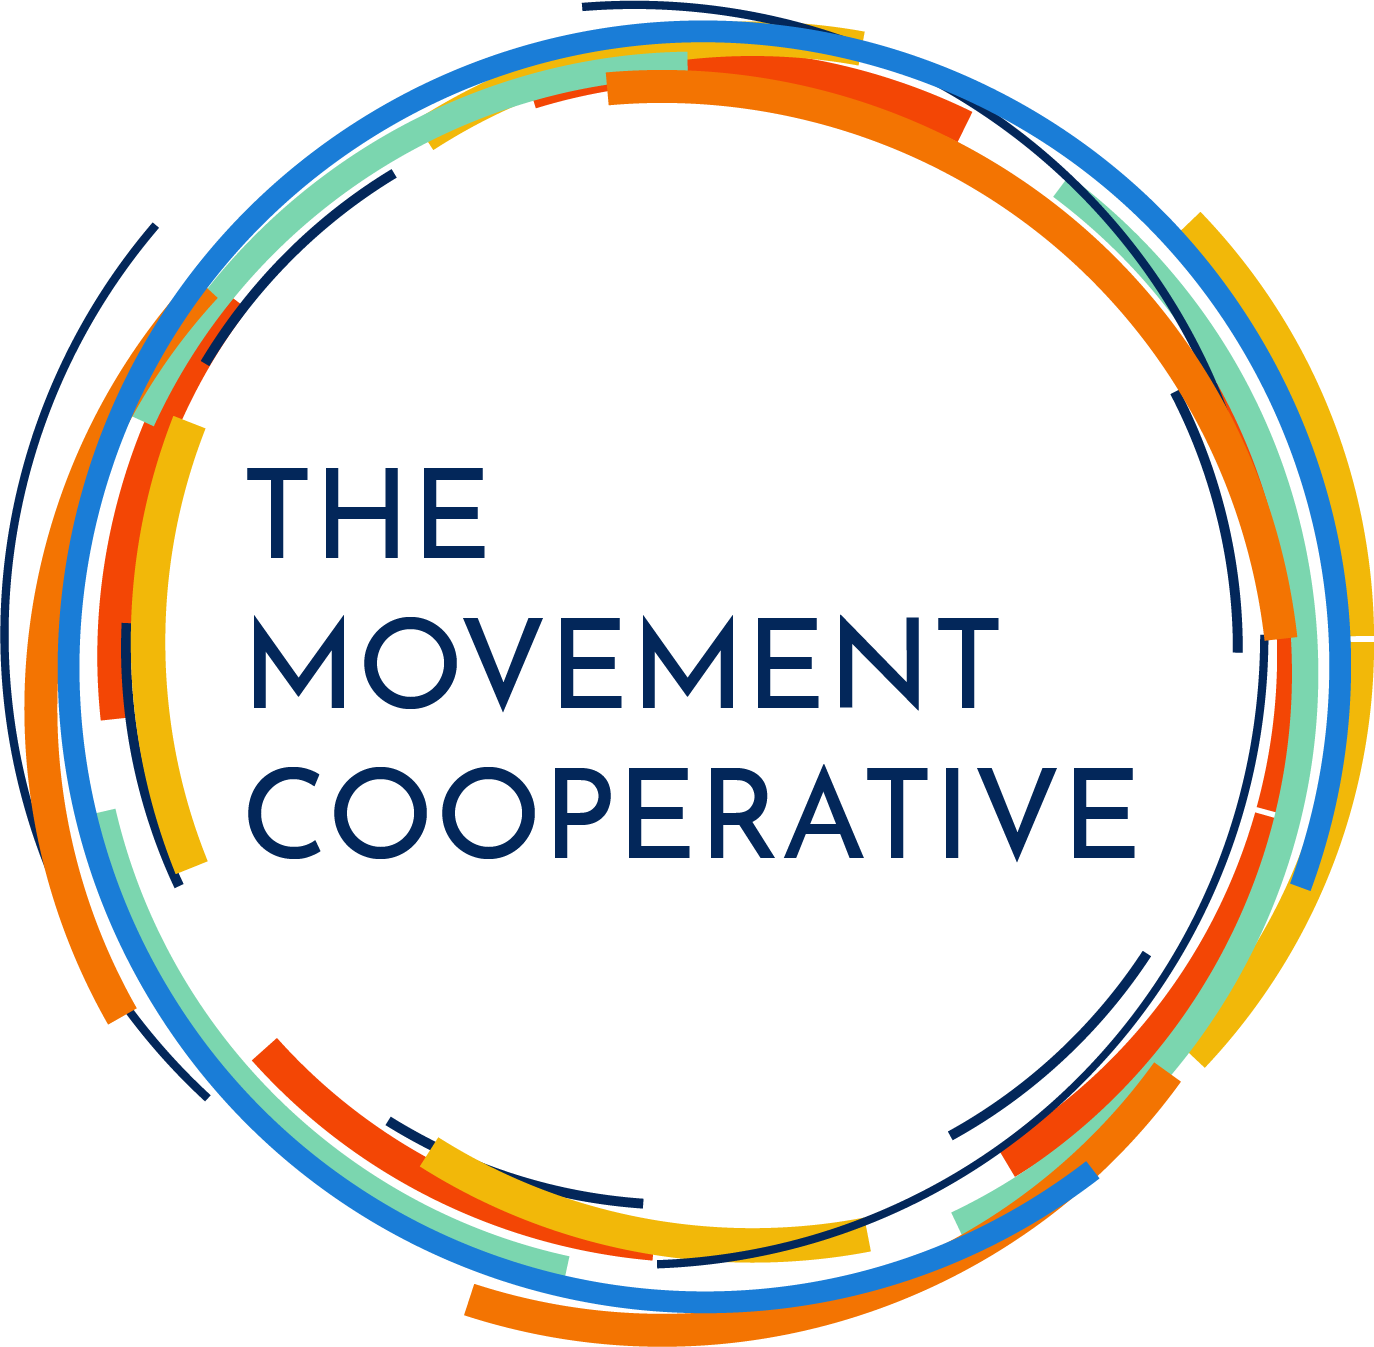 The Movement Cooperative